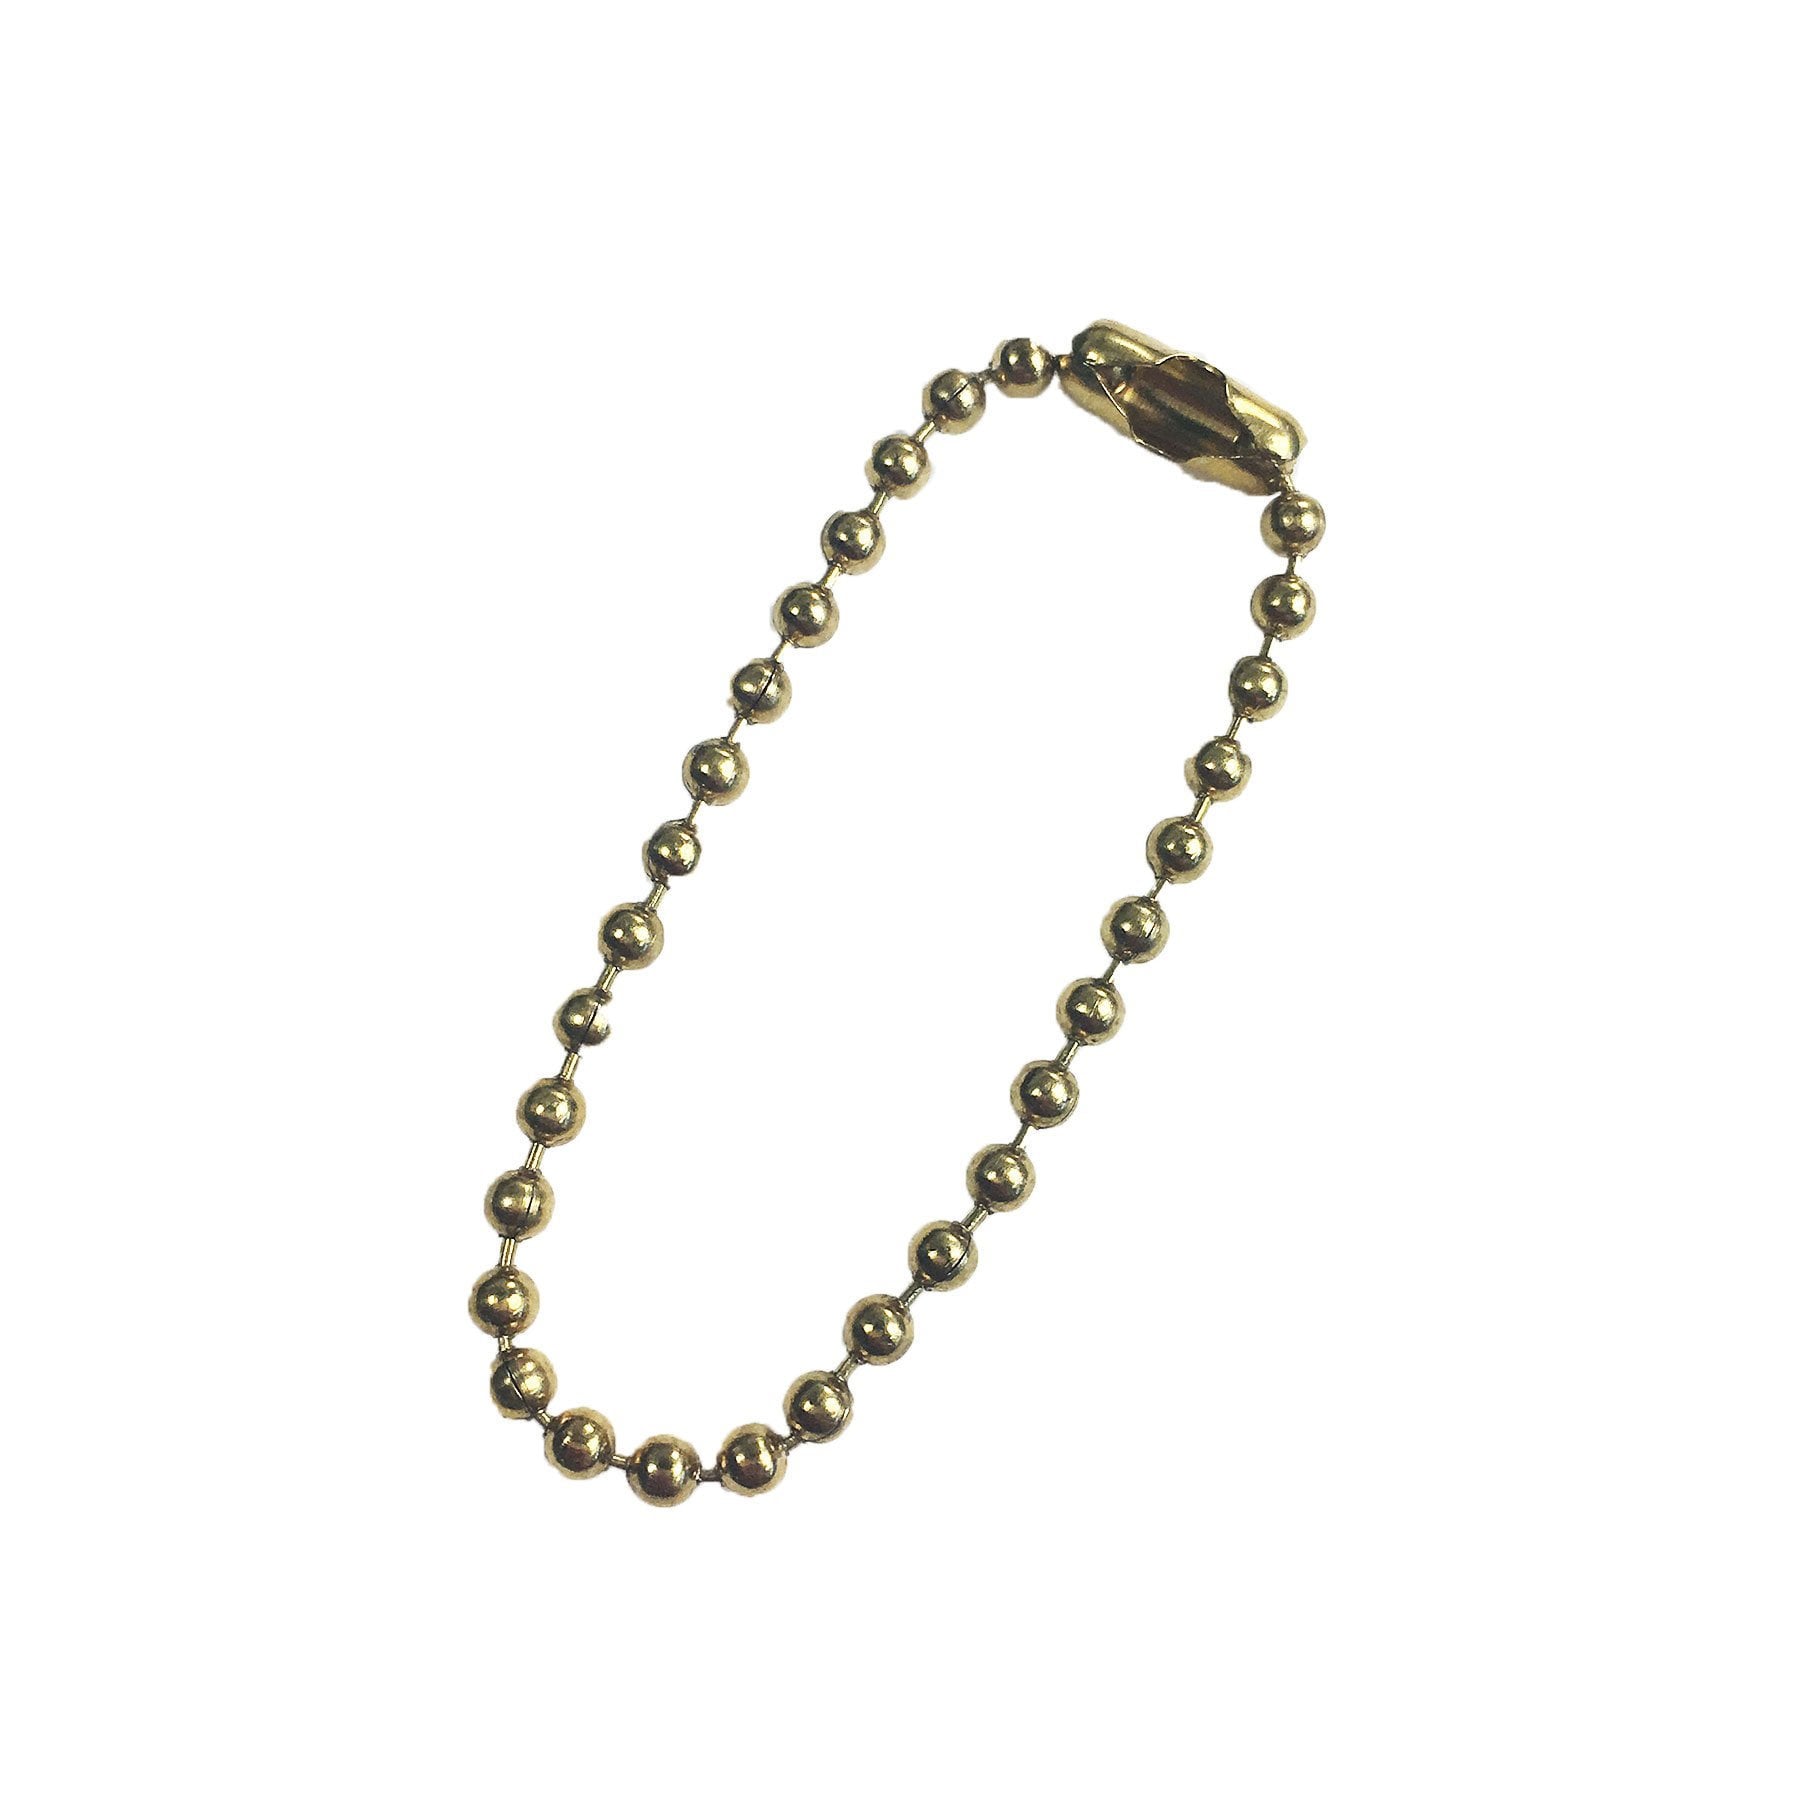 20pcs/lot ball bead chains fits key